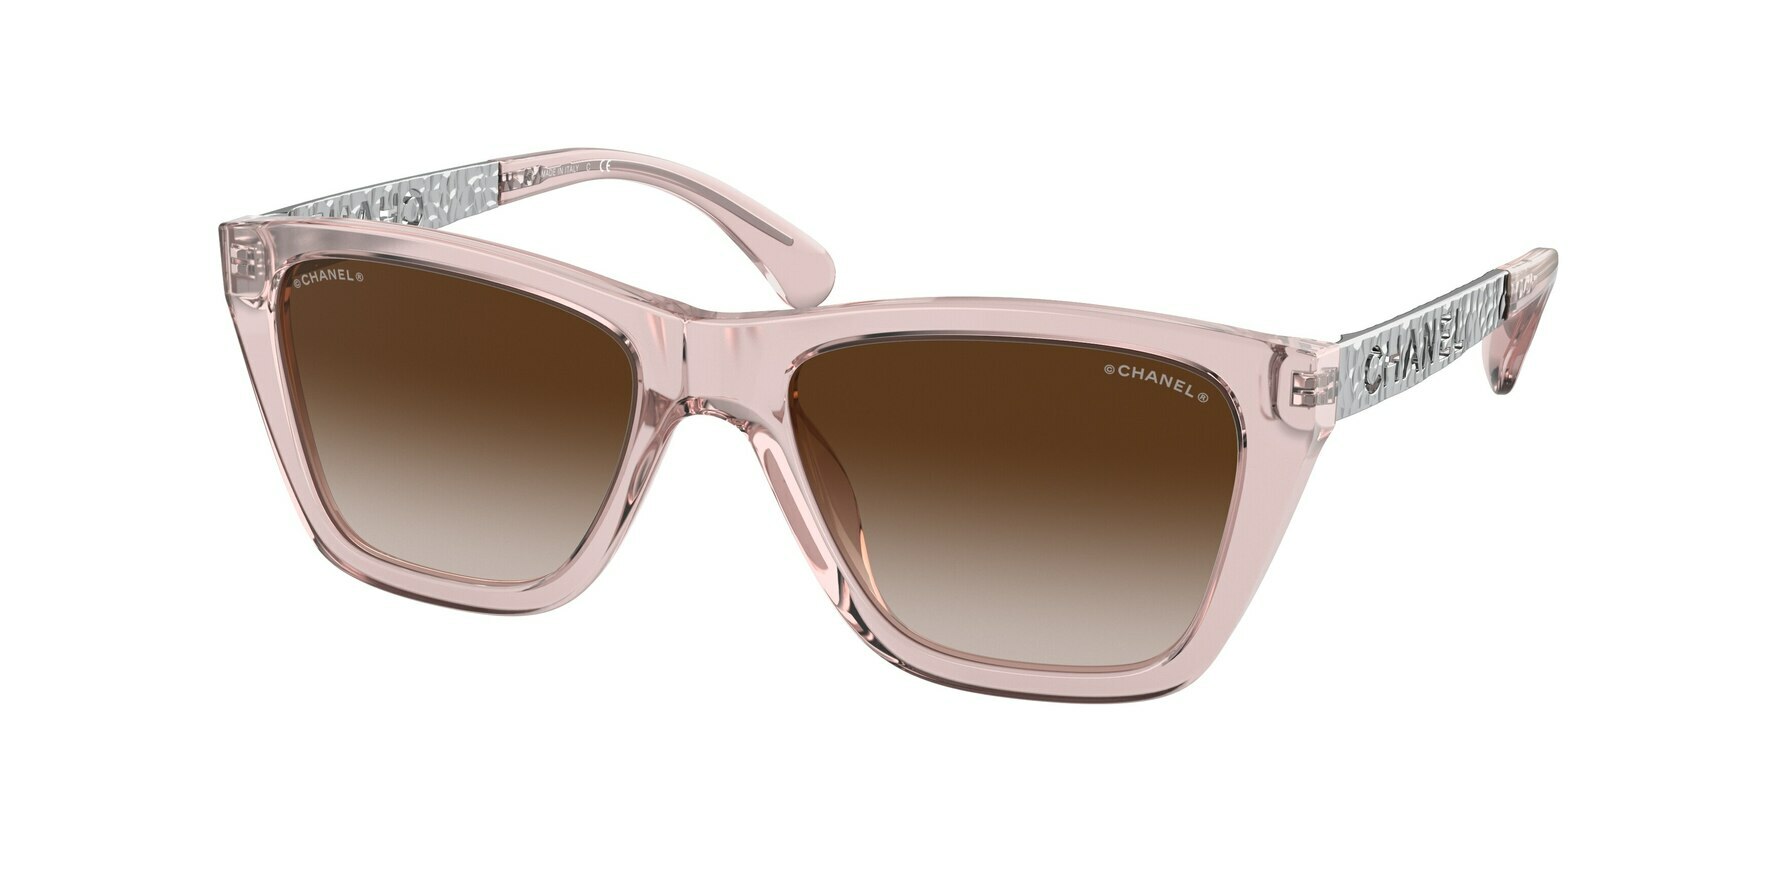 Chanel / CH5442 / Pink - Shop Glasses Online - Europtics, Denver, CO